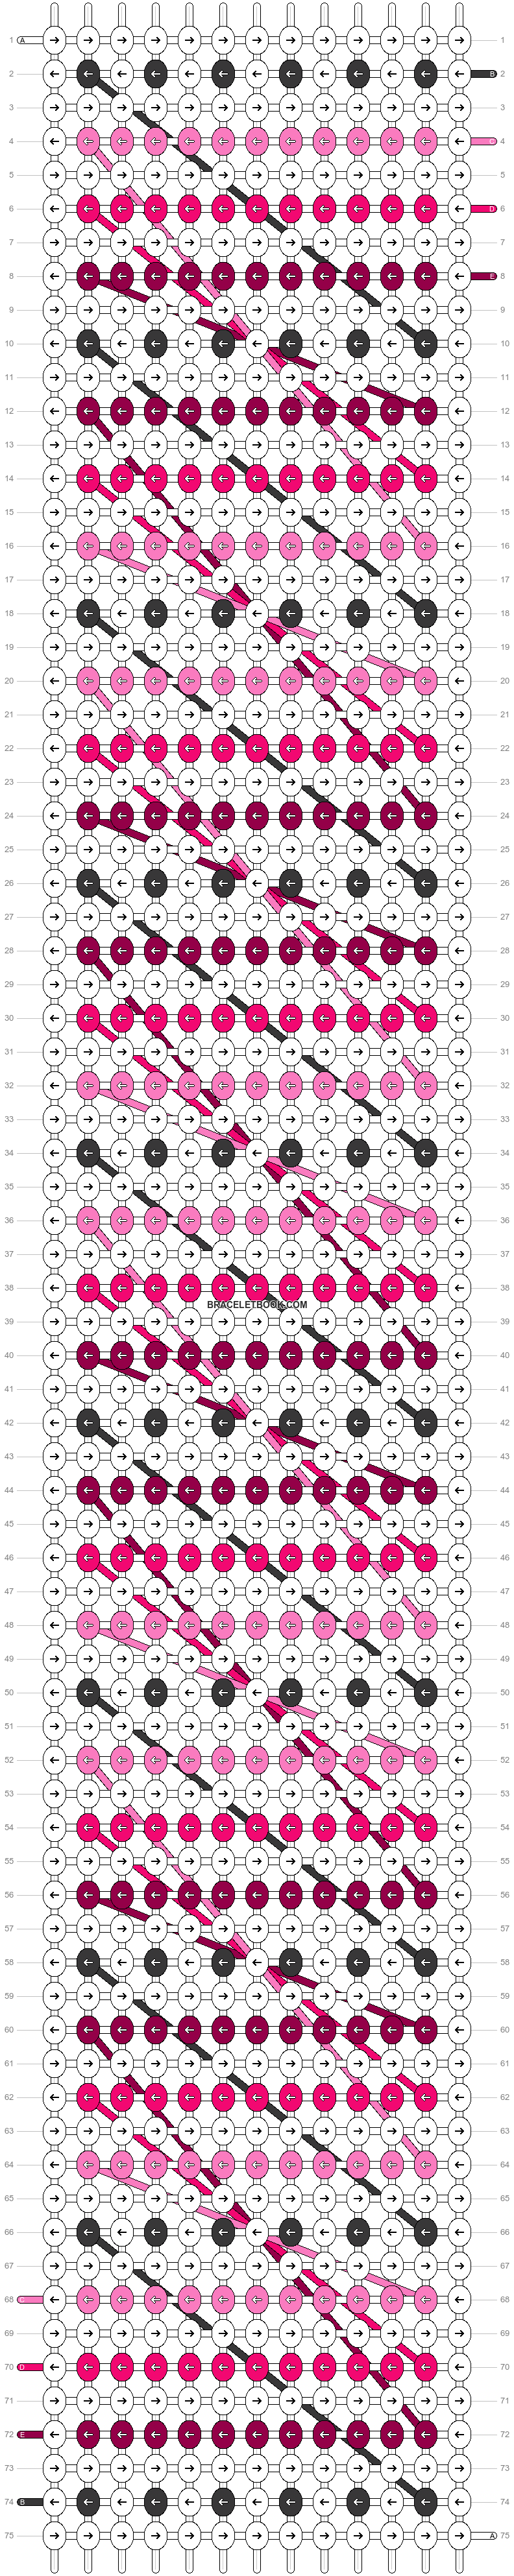 Alpha pattern #18676 pattern